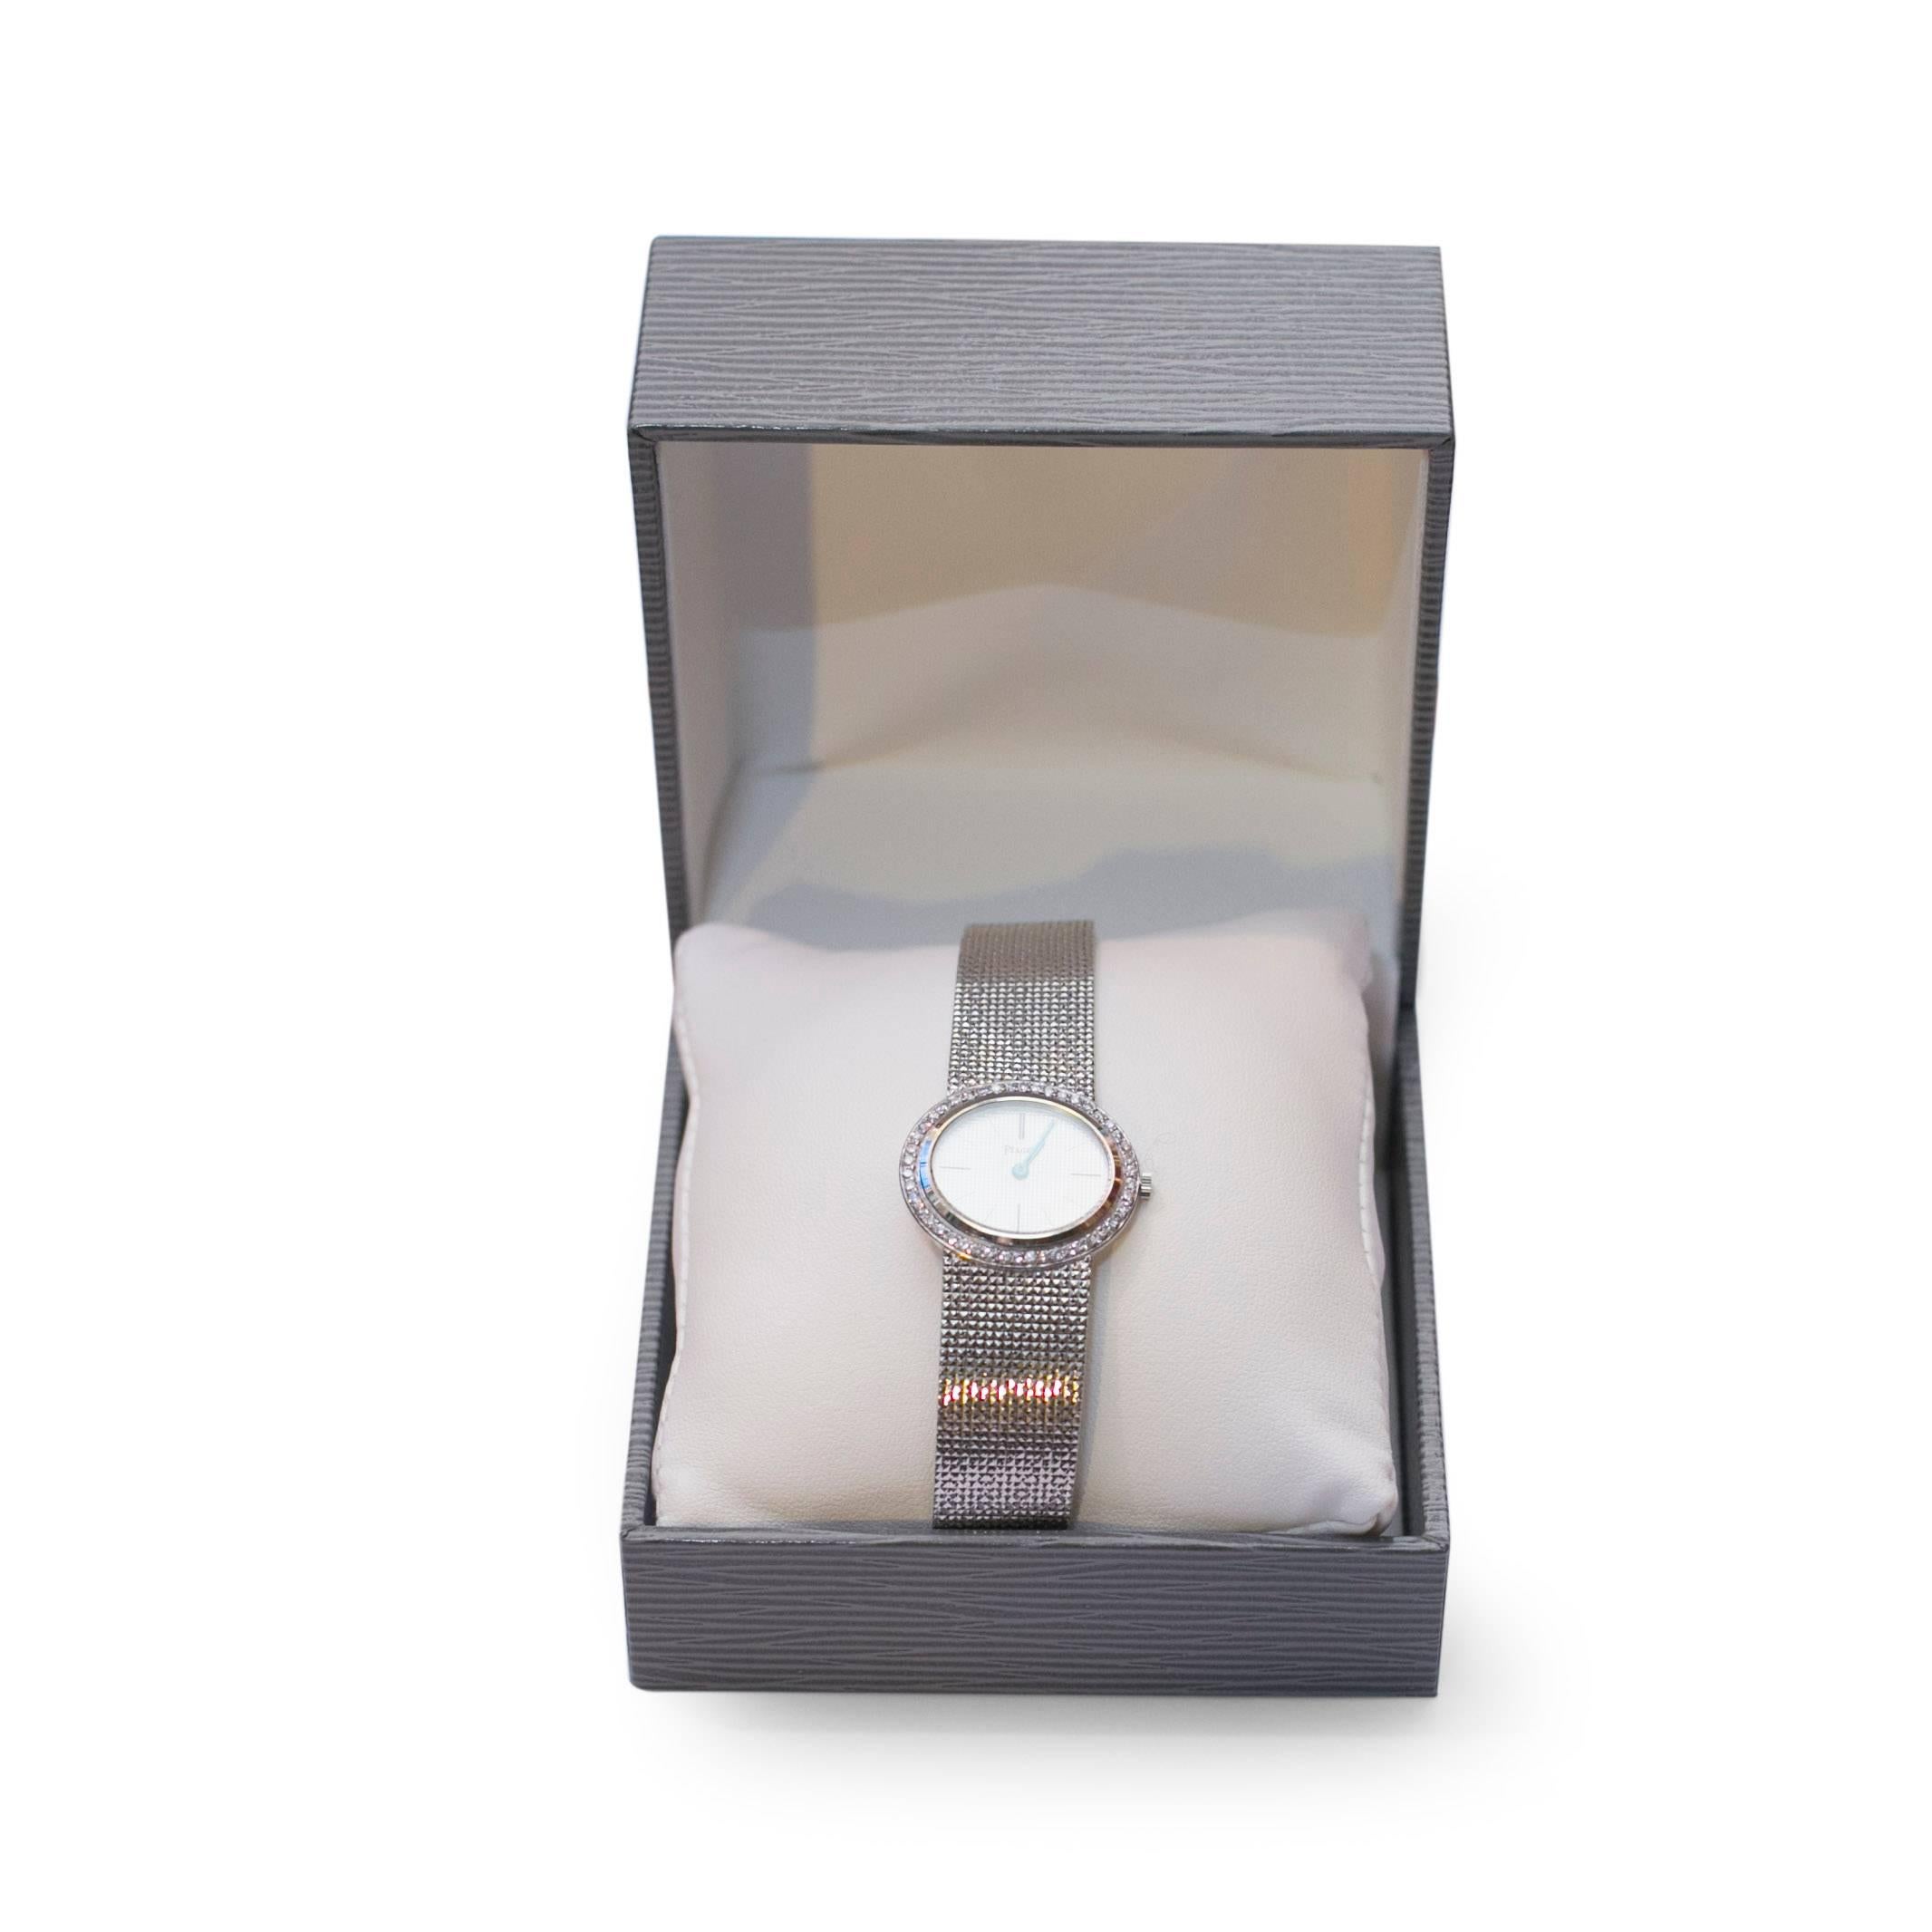 Contemporary Vintage Piaget Ladies Altiplano 18 Karat White Gold Diamonds Wristwatch